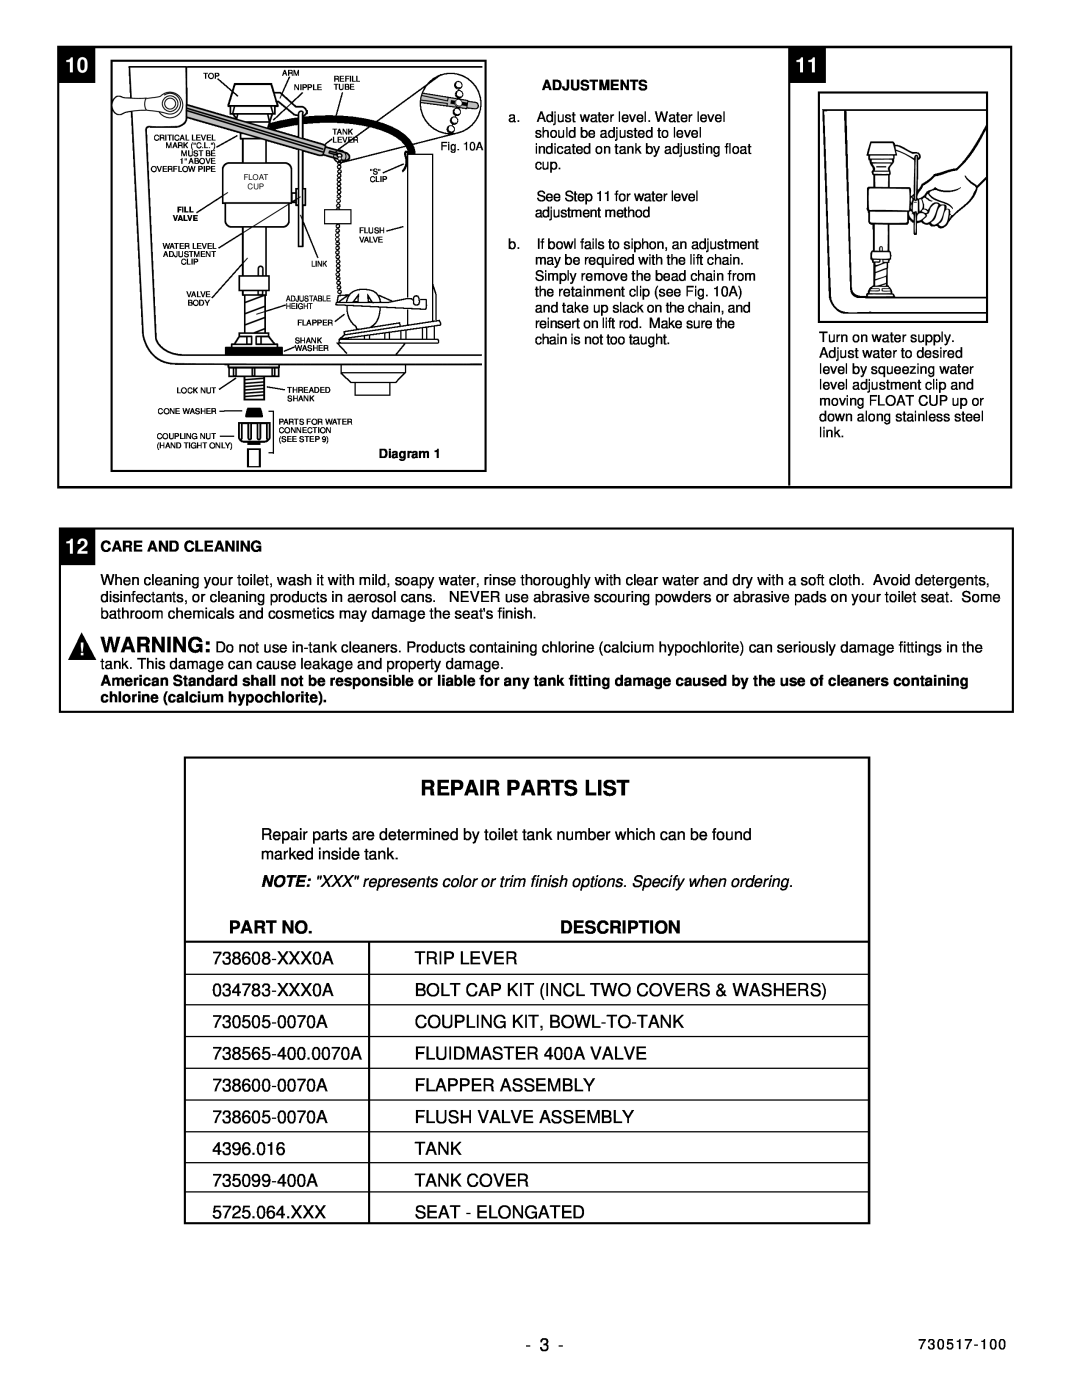 American Standard 2474 installation instructions Repair Parts List, Description 